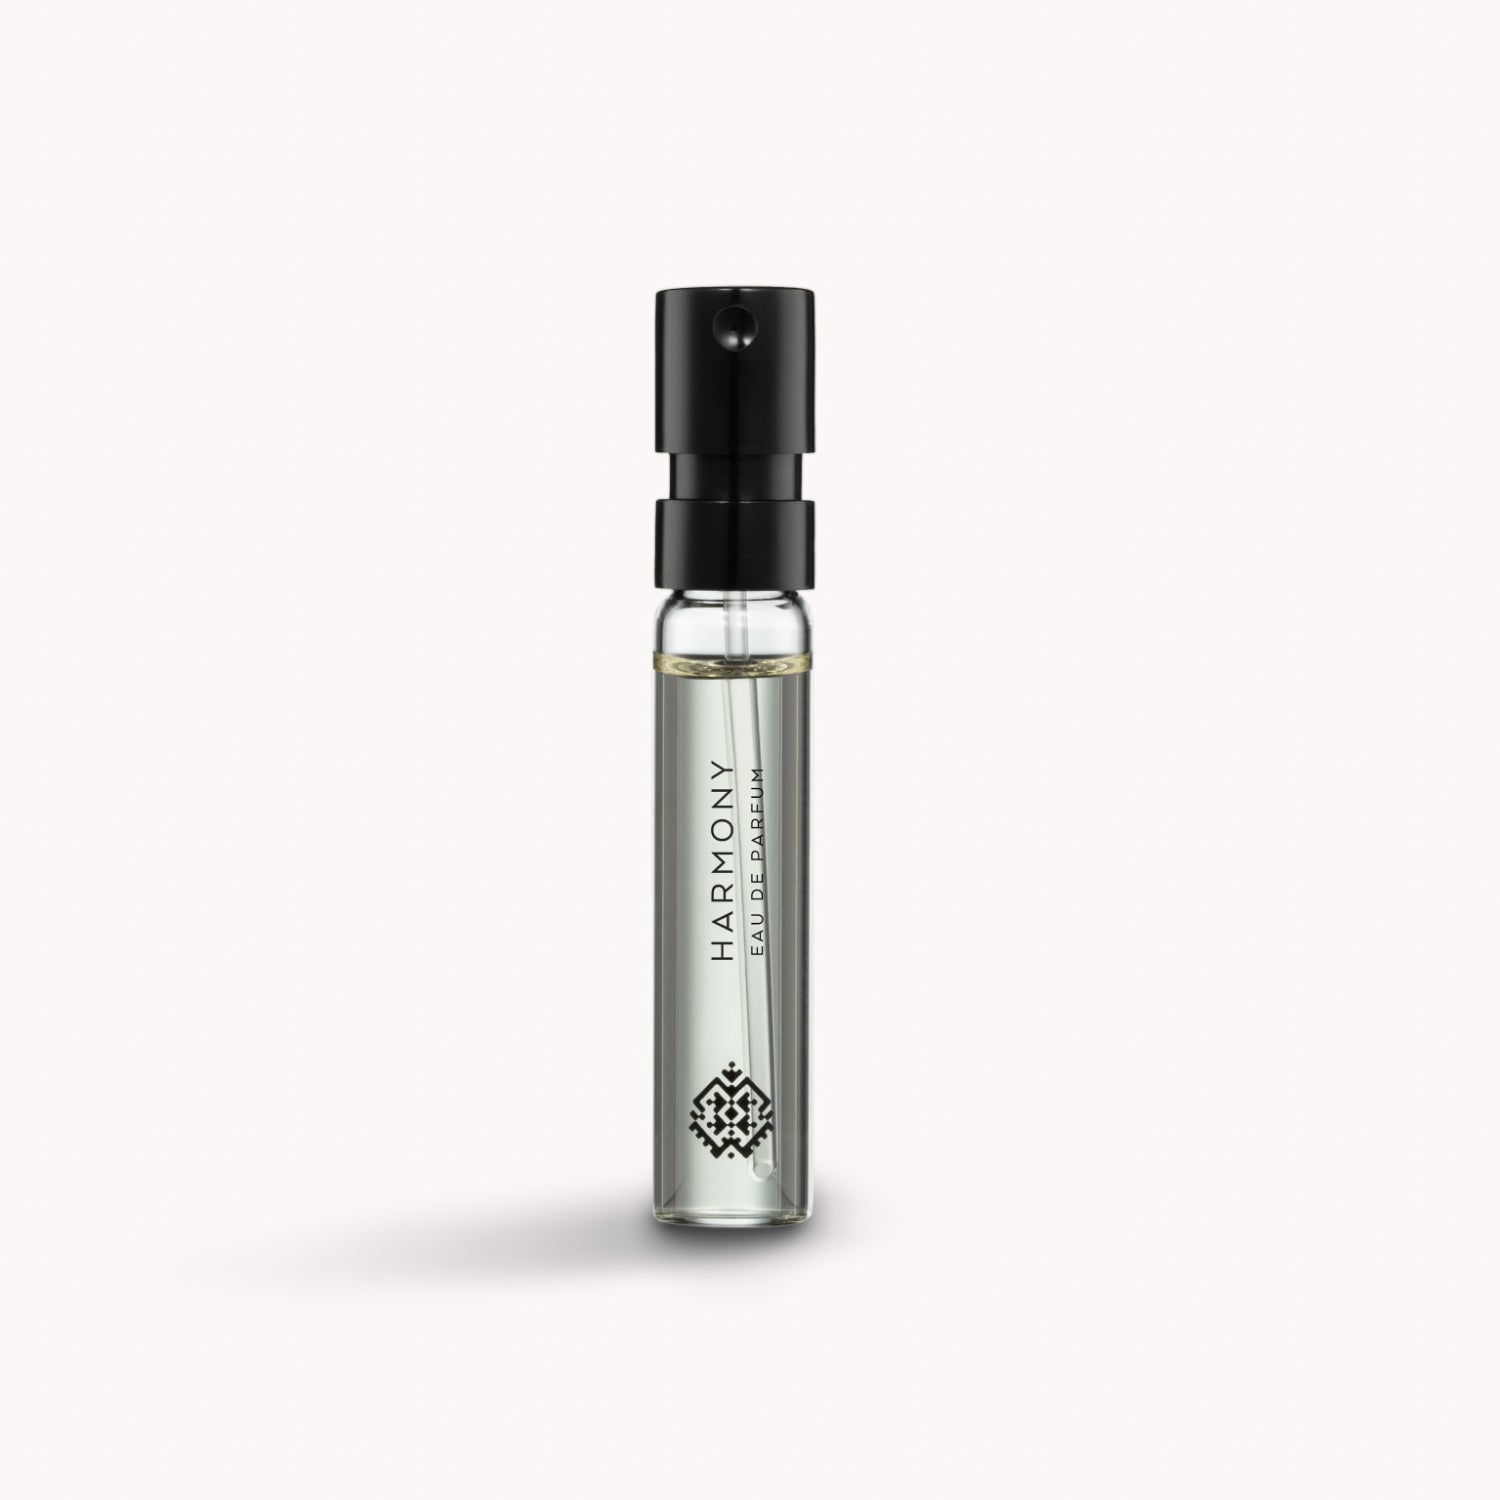 Harmony Sample - Eau De Parfum 2ml - Premium Unisex Perfume for Men & Women